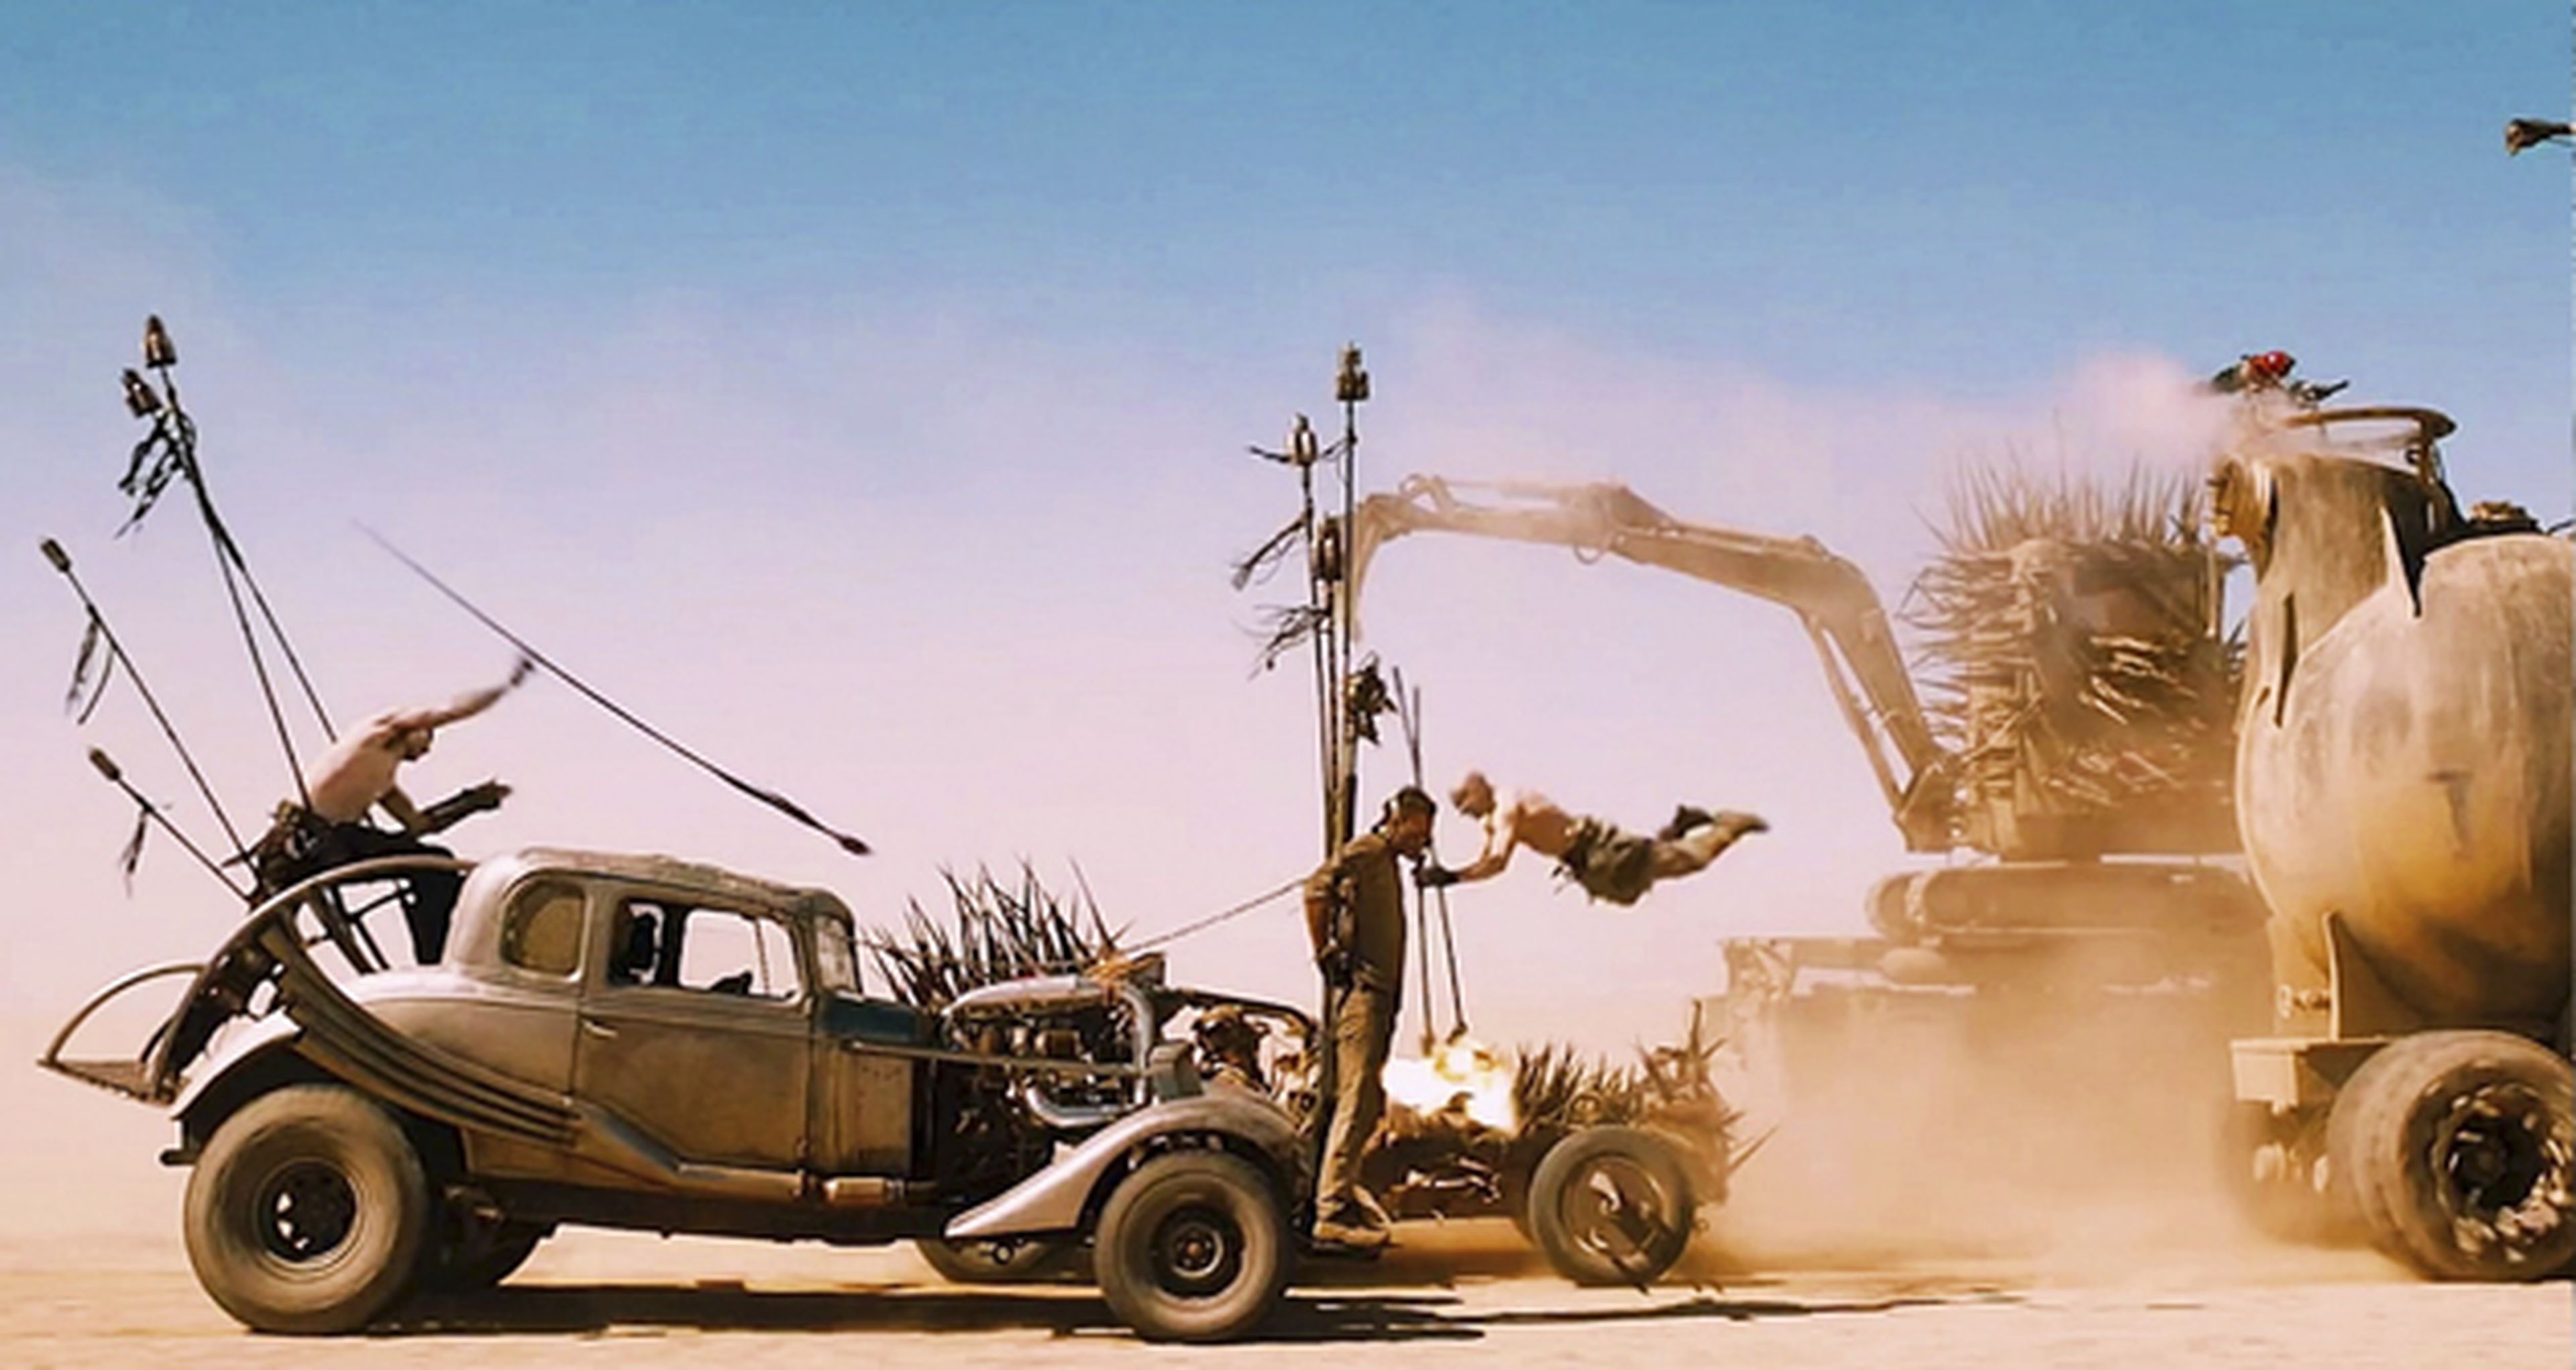 Mad Max: furia en la carretera - Crítica de la ganadora de 6 Oscars en 2016